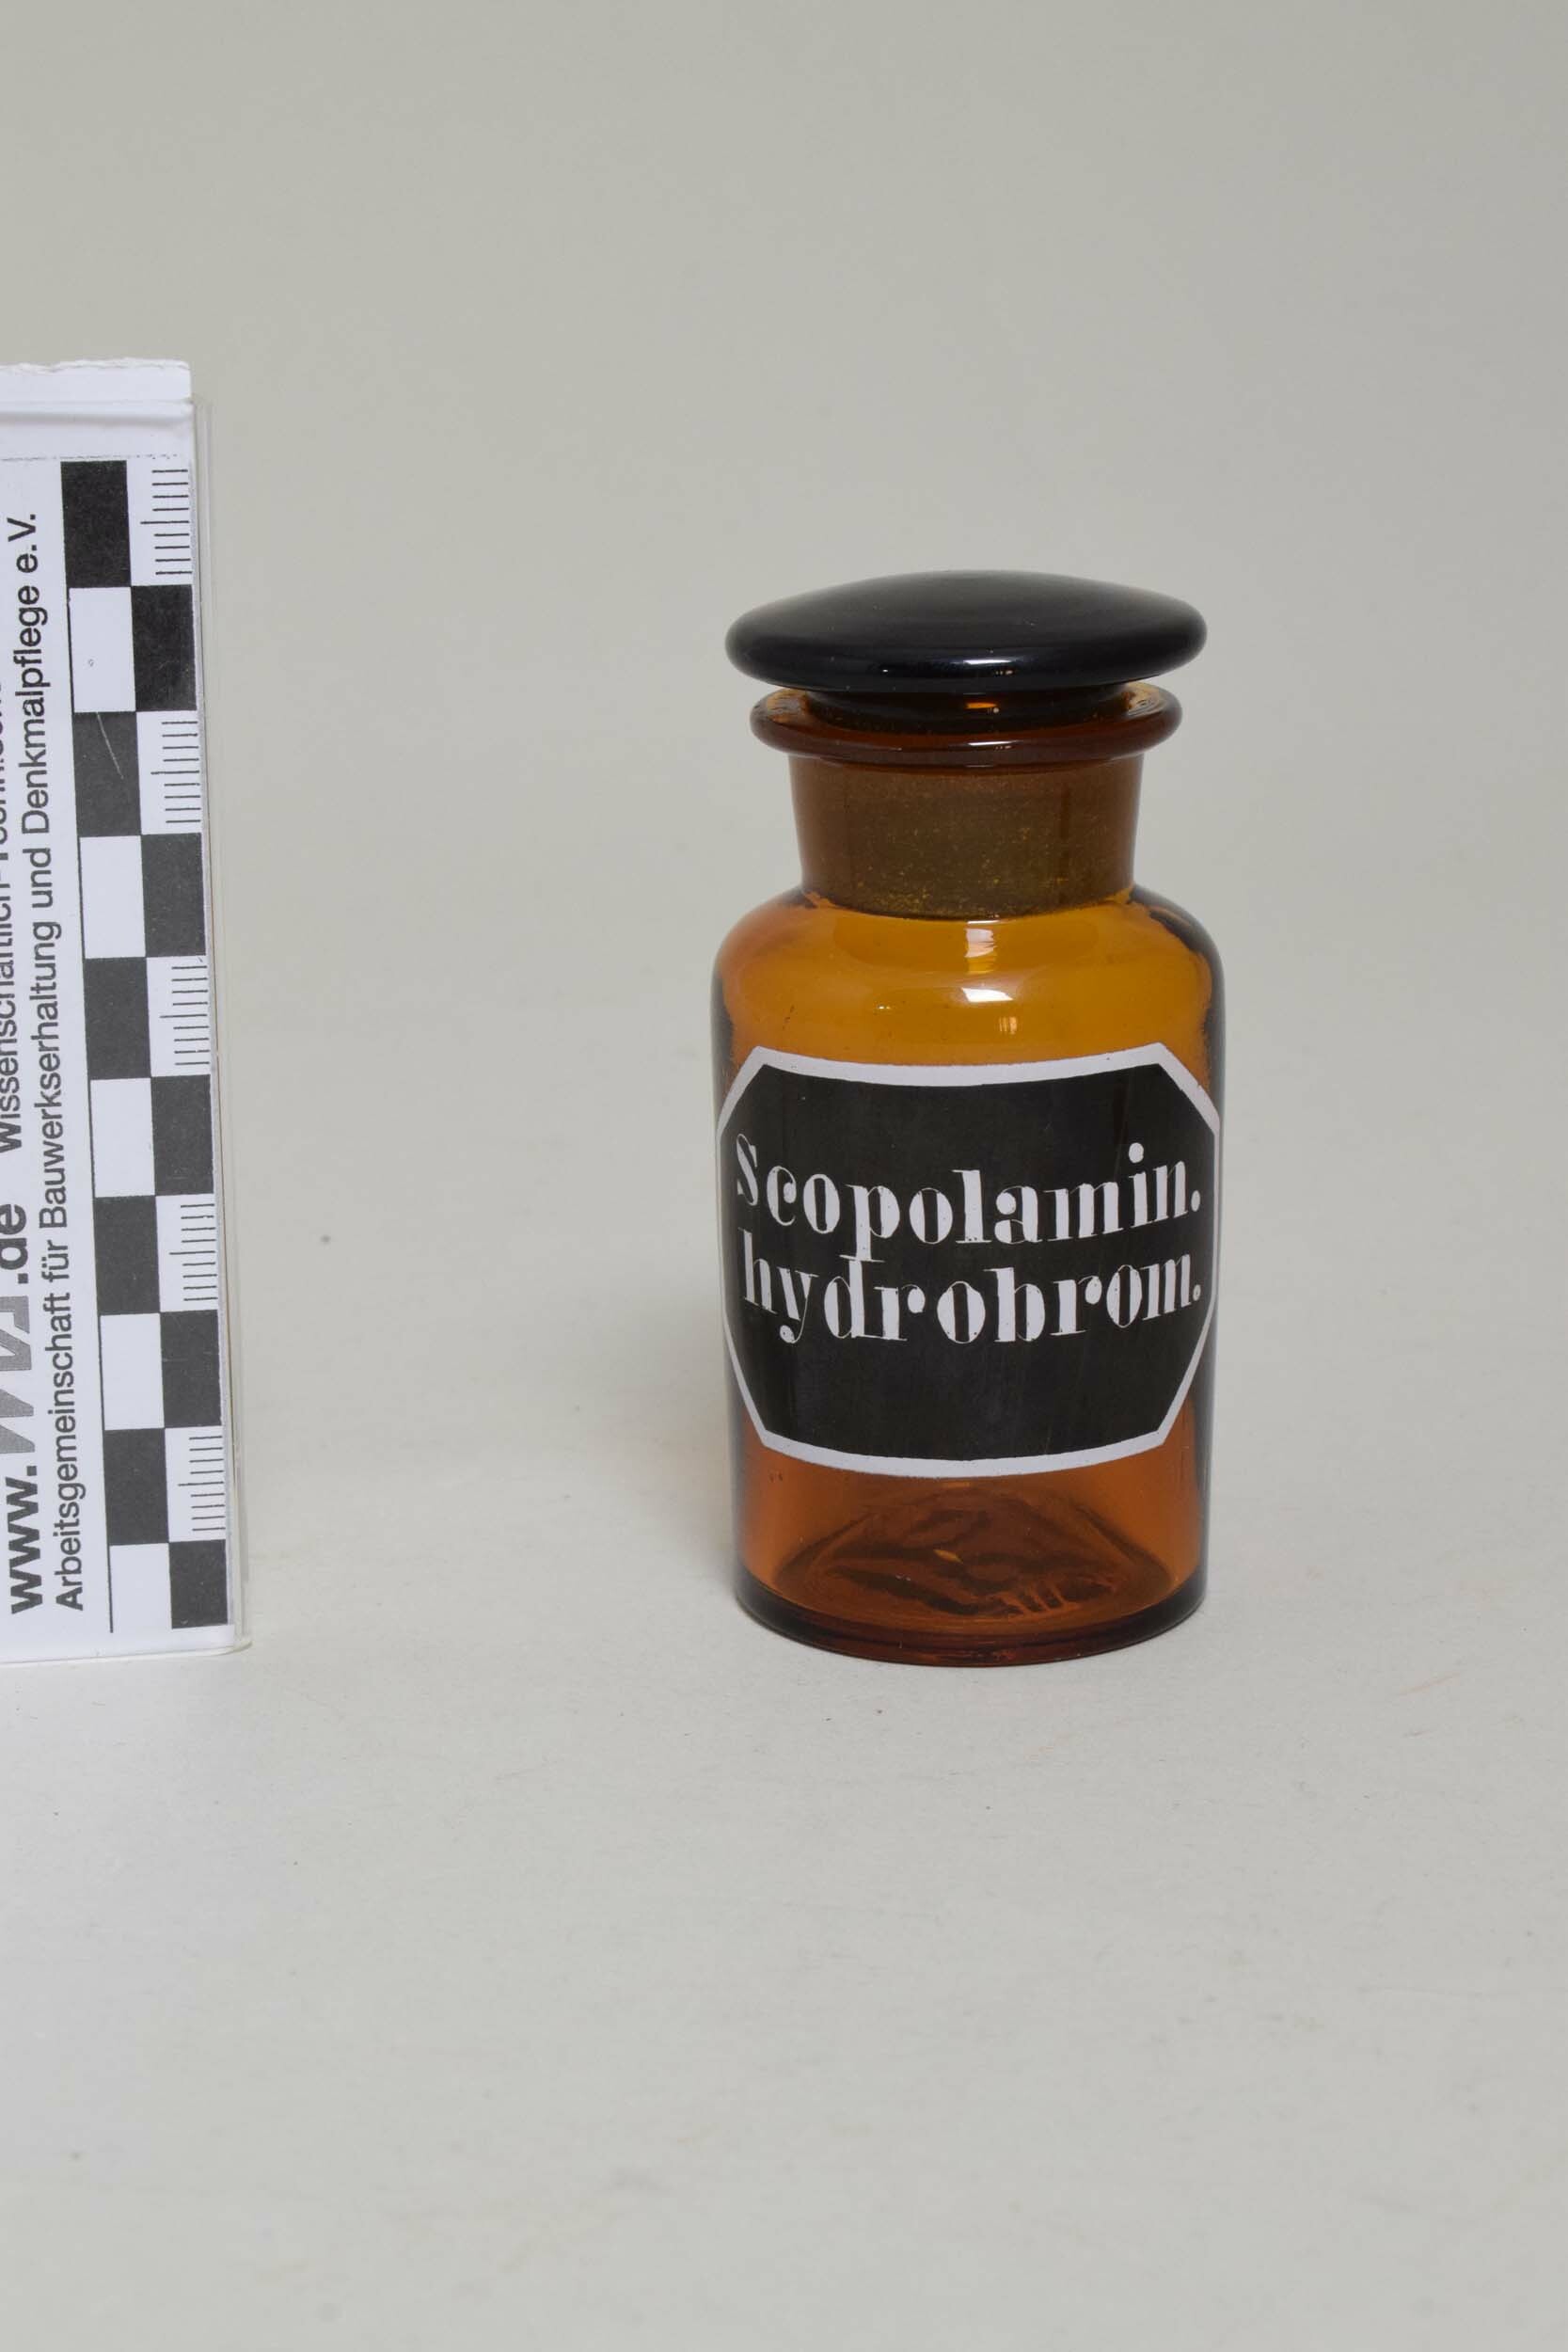 Apothekenflasche "Scopolamin. hydrochlor." (Skopolaminumhydrochlorid) (Heimatmuseum Dohna CC BY-NC-SA)